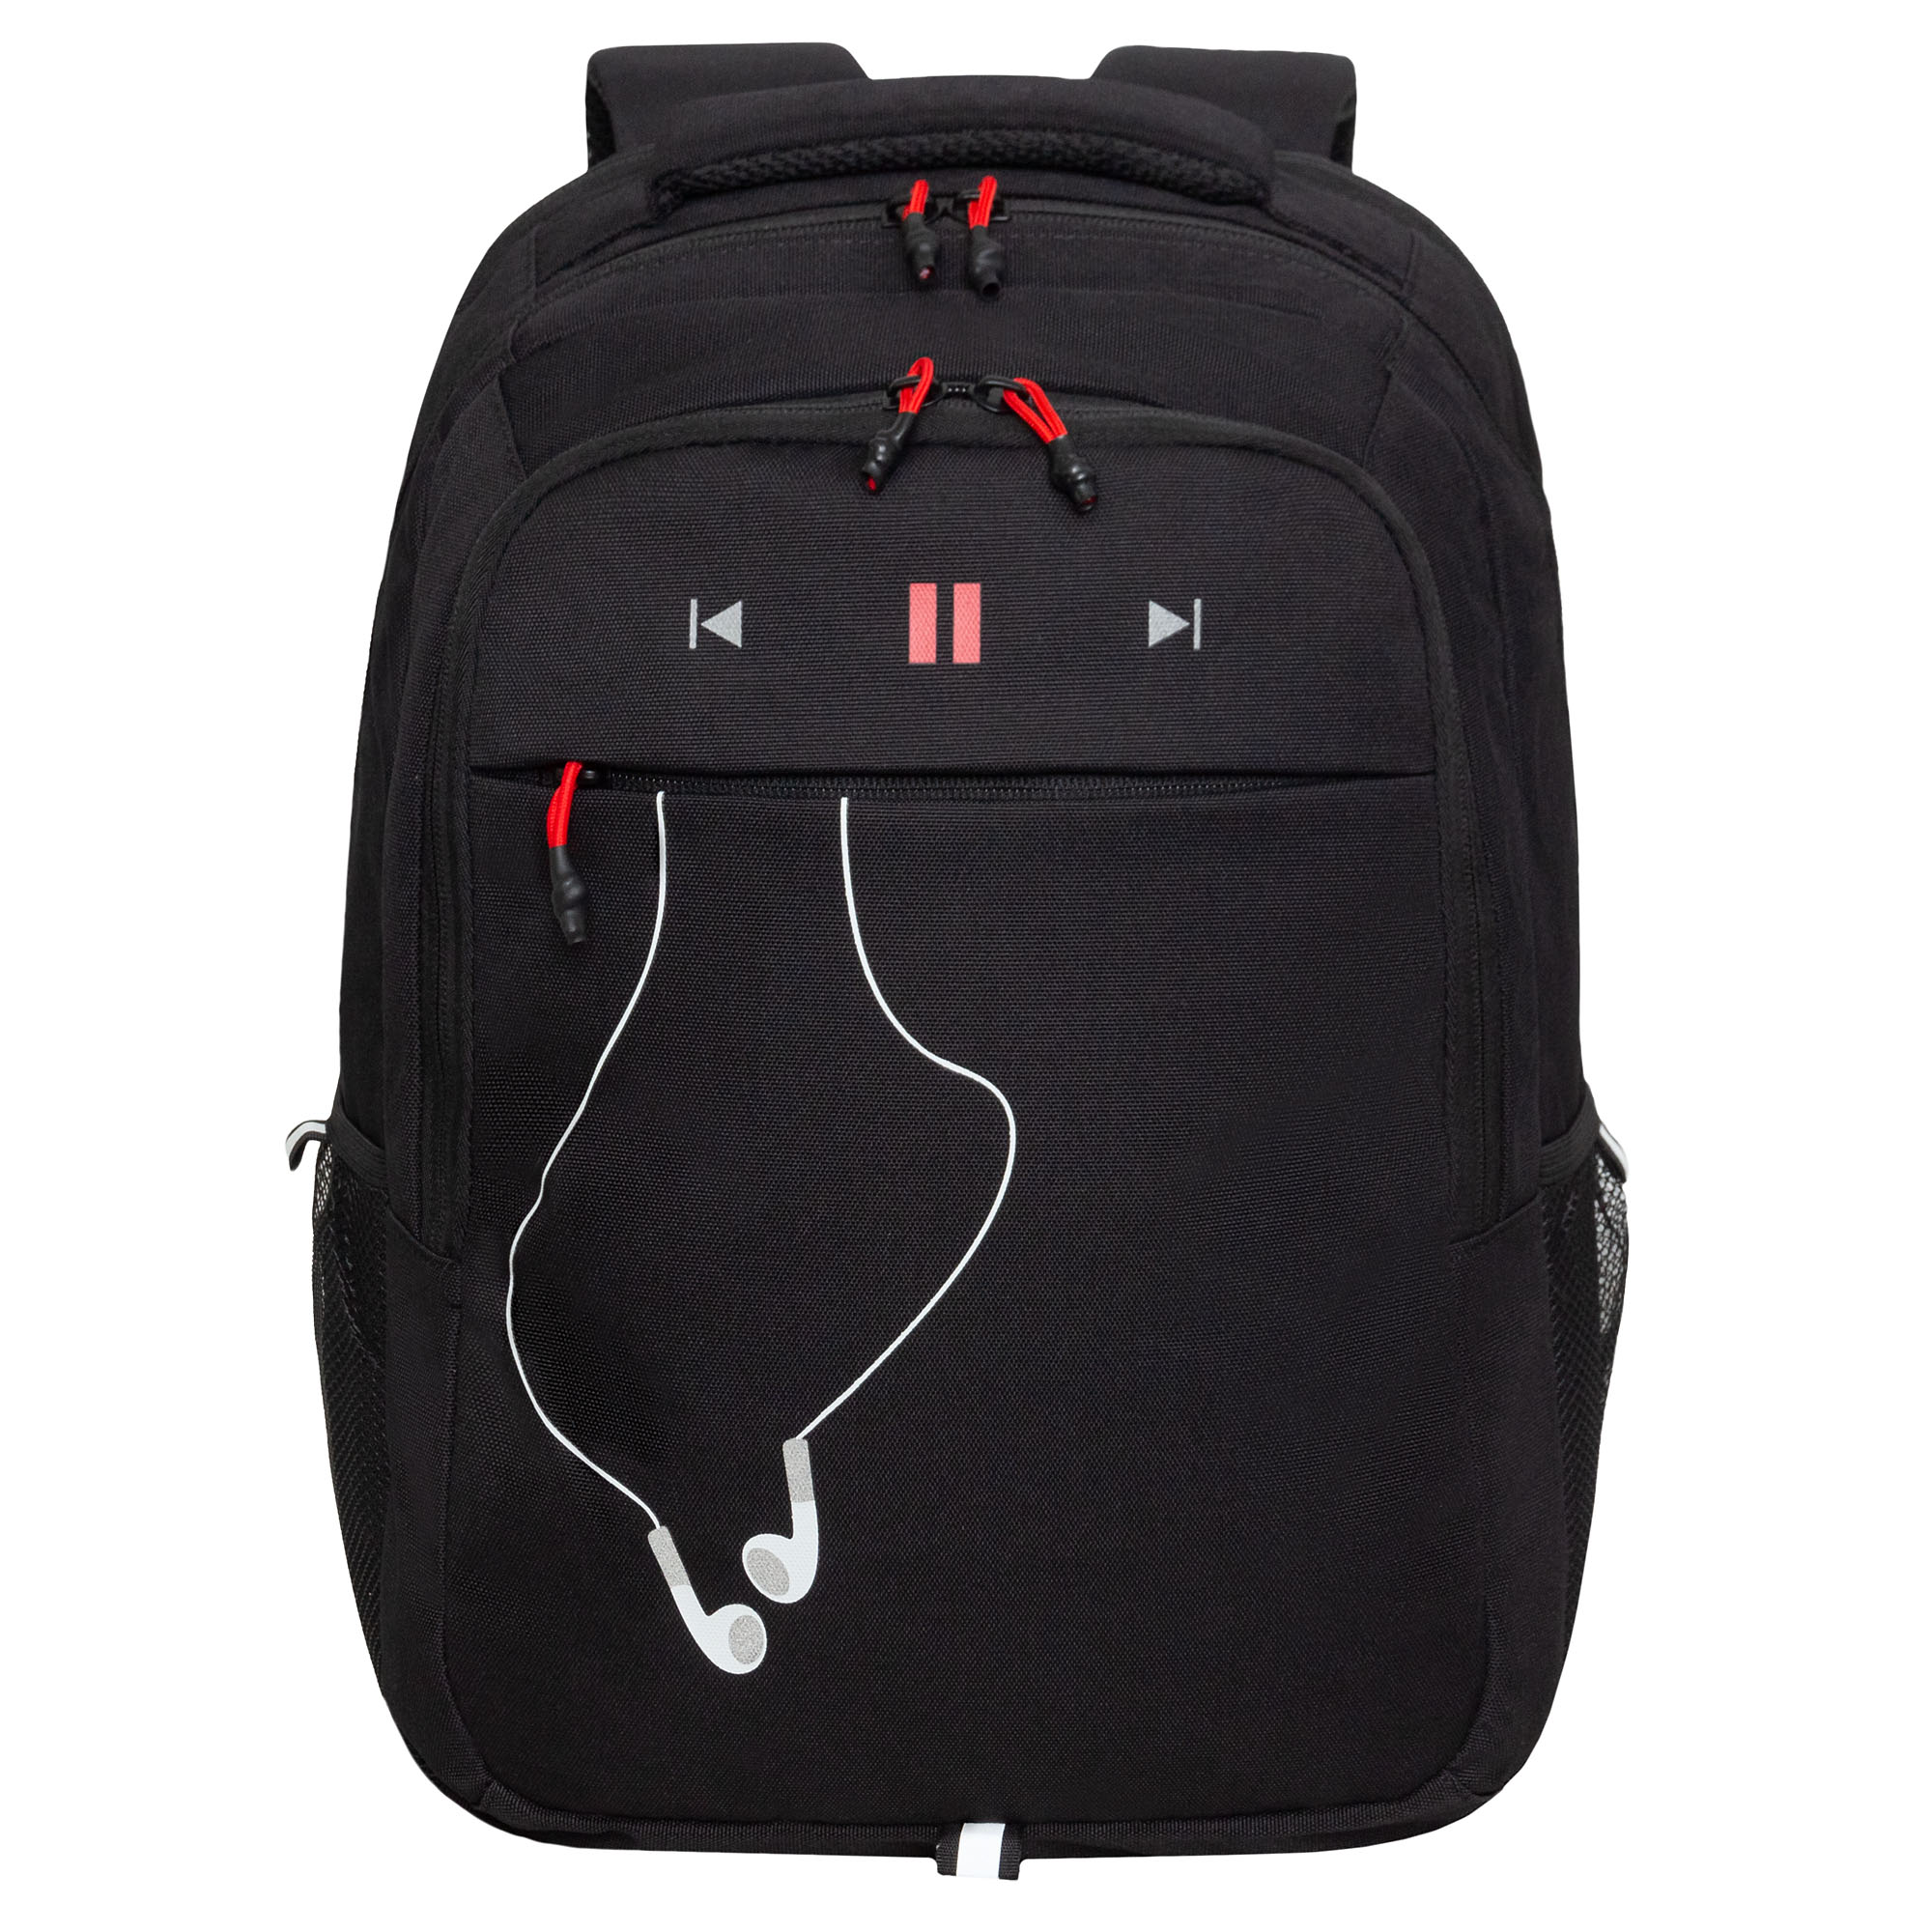 Рюкзак молодежный Grizzly с карманом для ноутбука 15, RU-432-4/2, черный, красный рюкзак молодежный grizzly rd 440 4 1 с карманом для ноутбука 13 золото